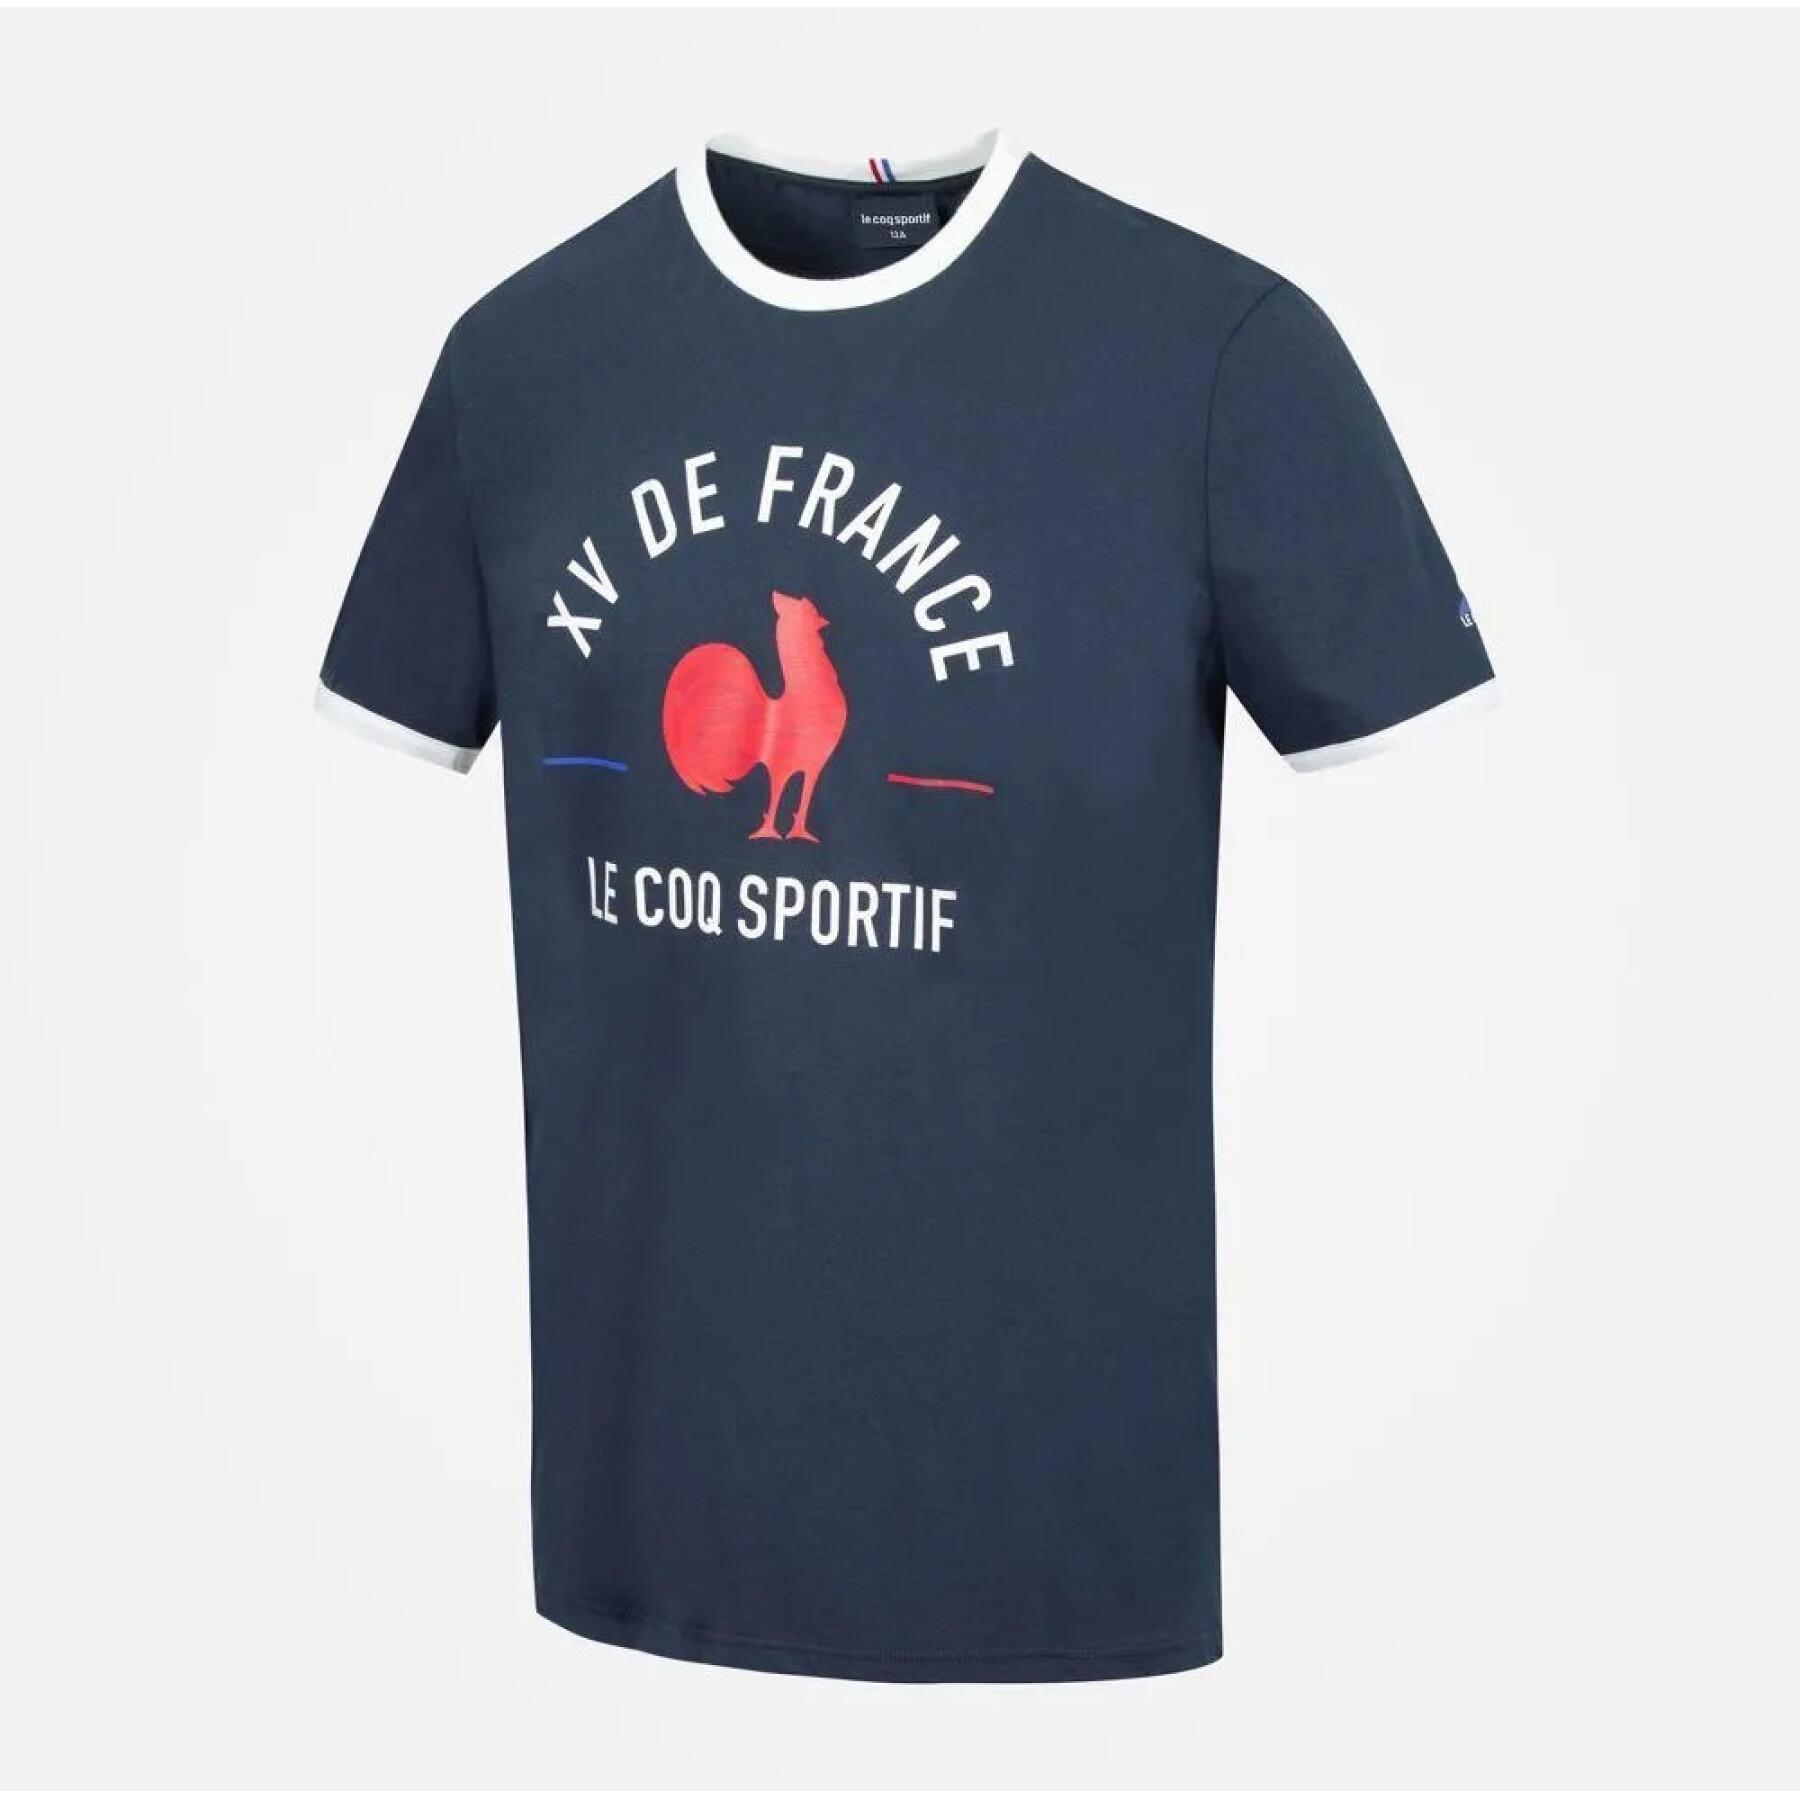 T-shirt child xv of France 2021/22